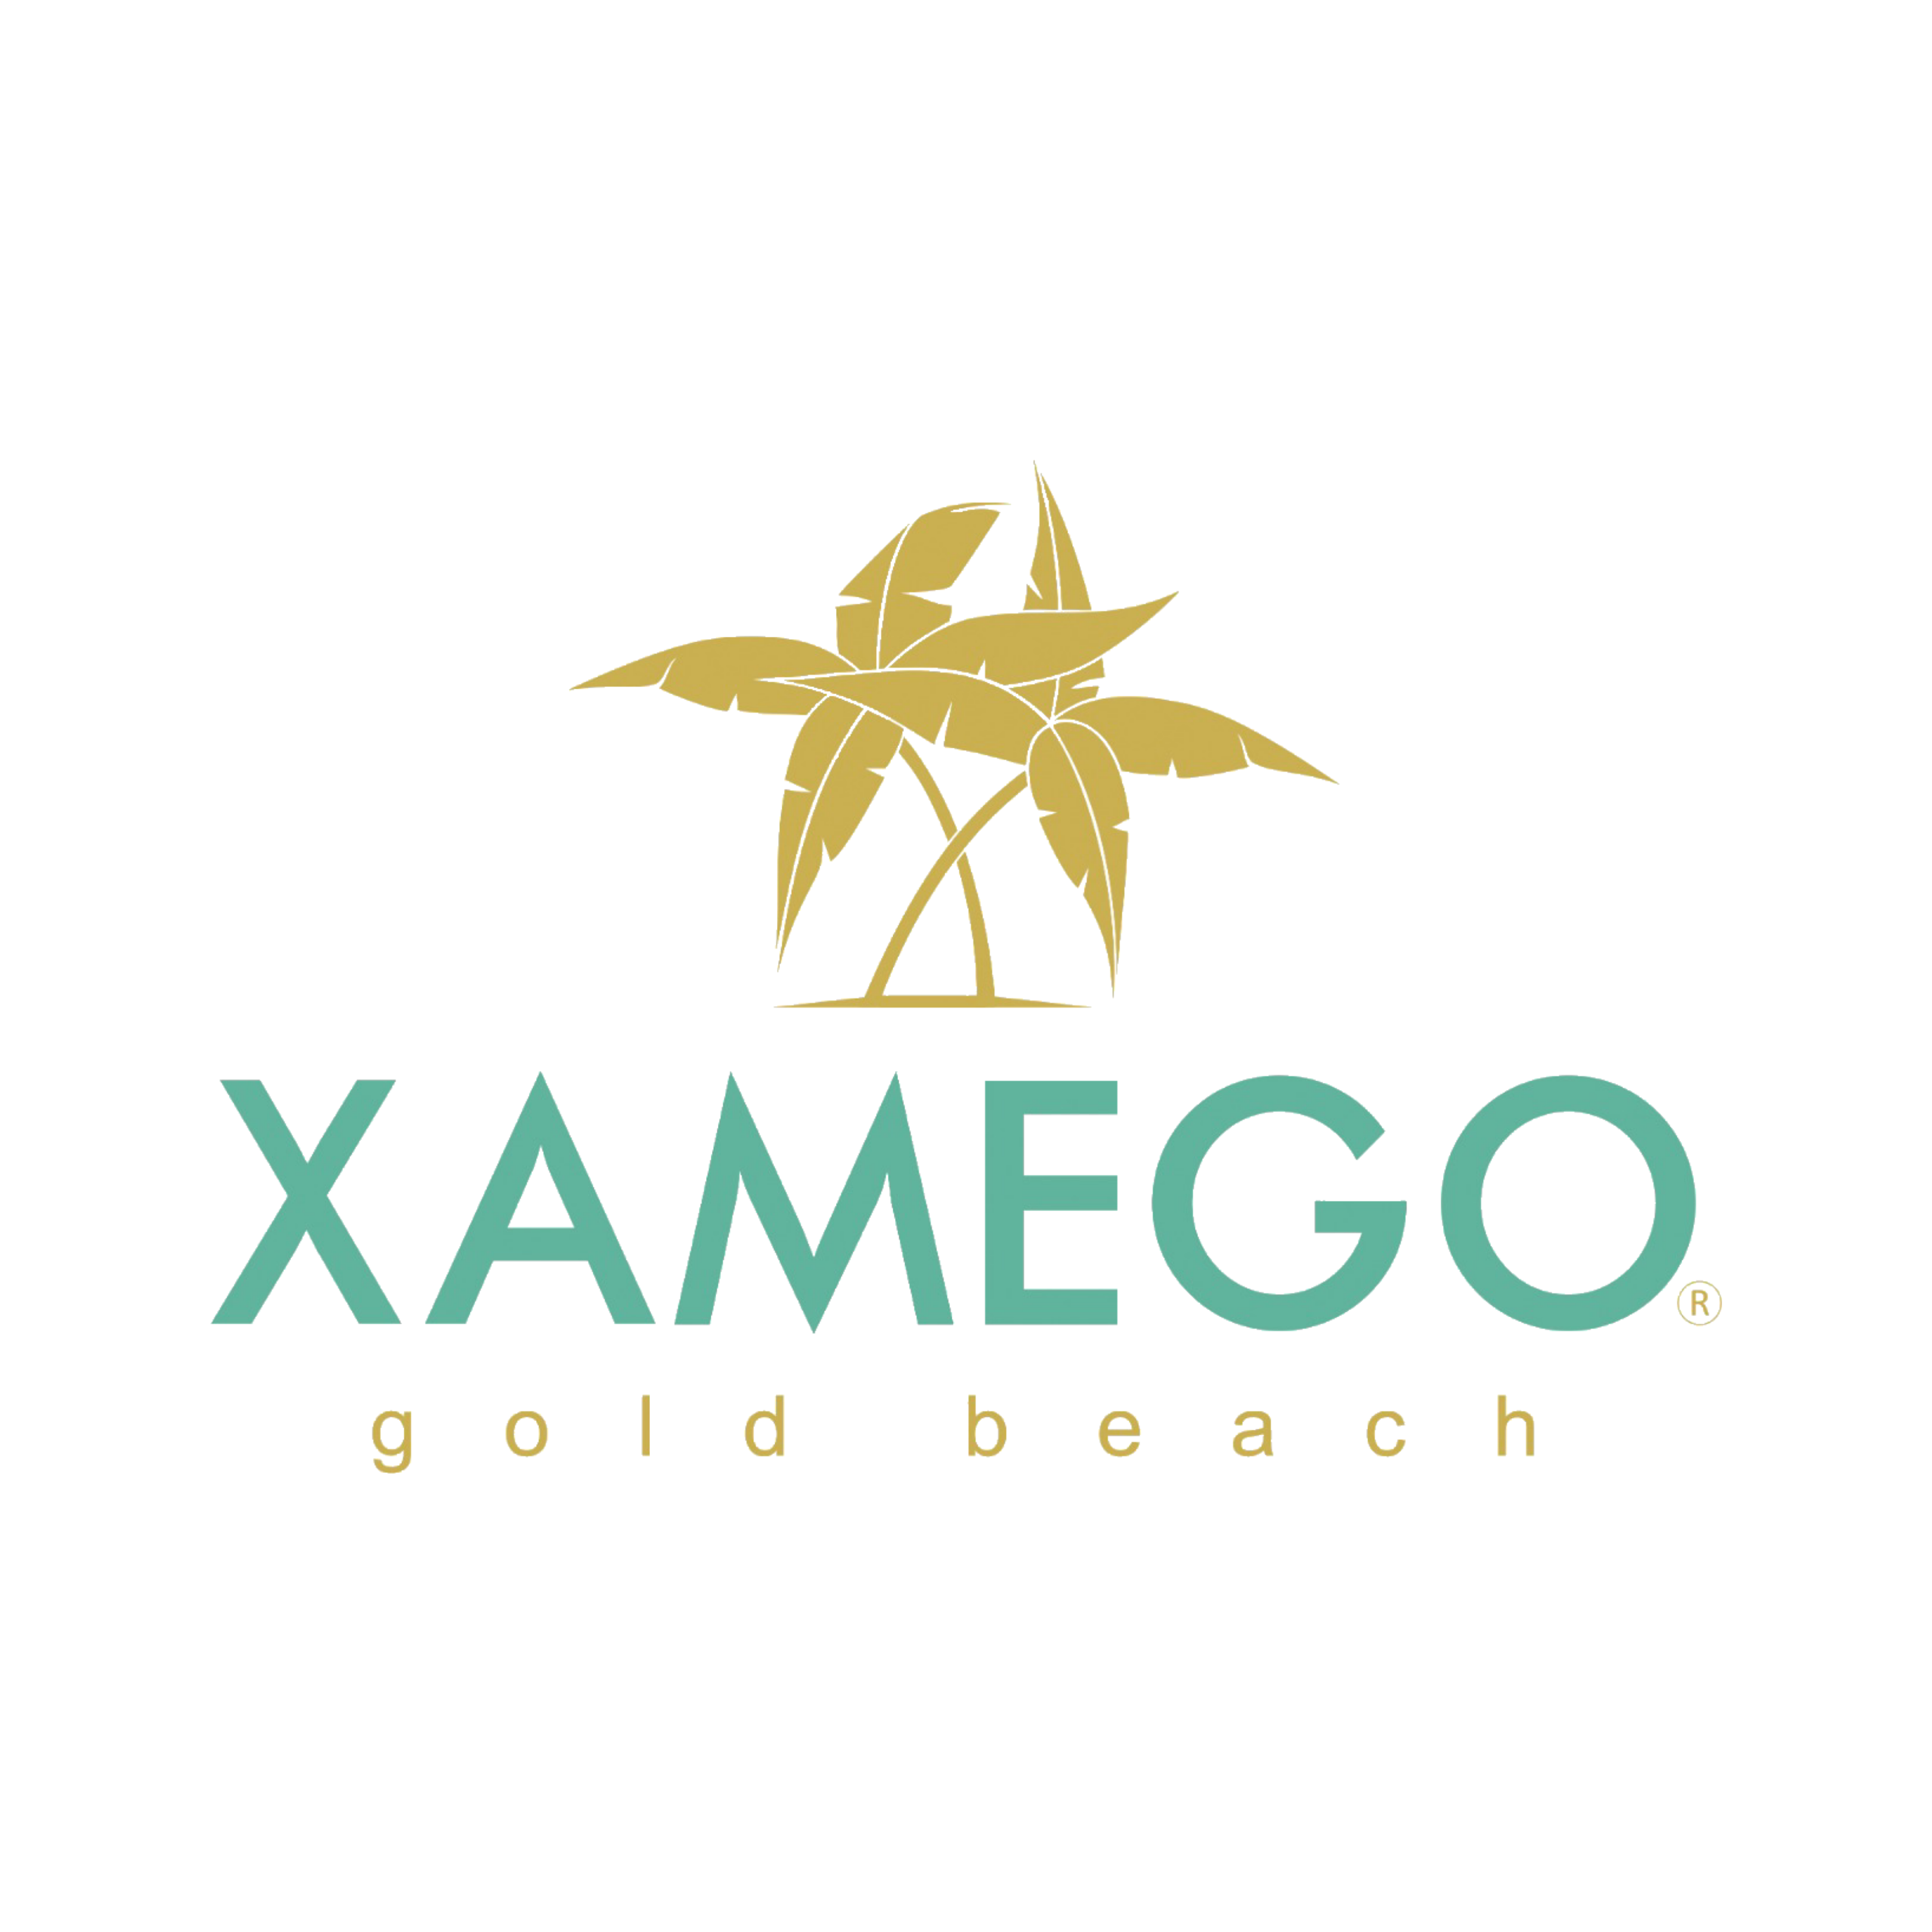 Xamego Gold Beach